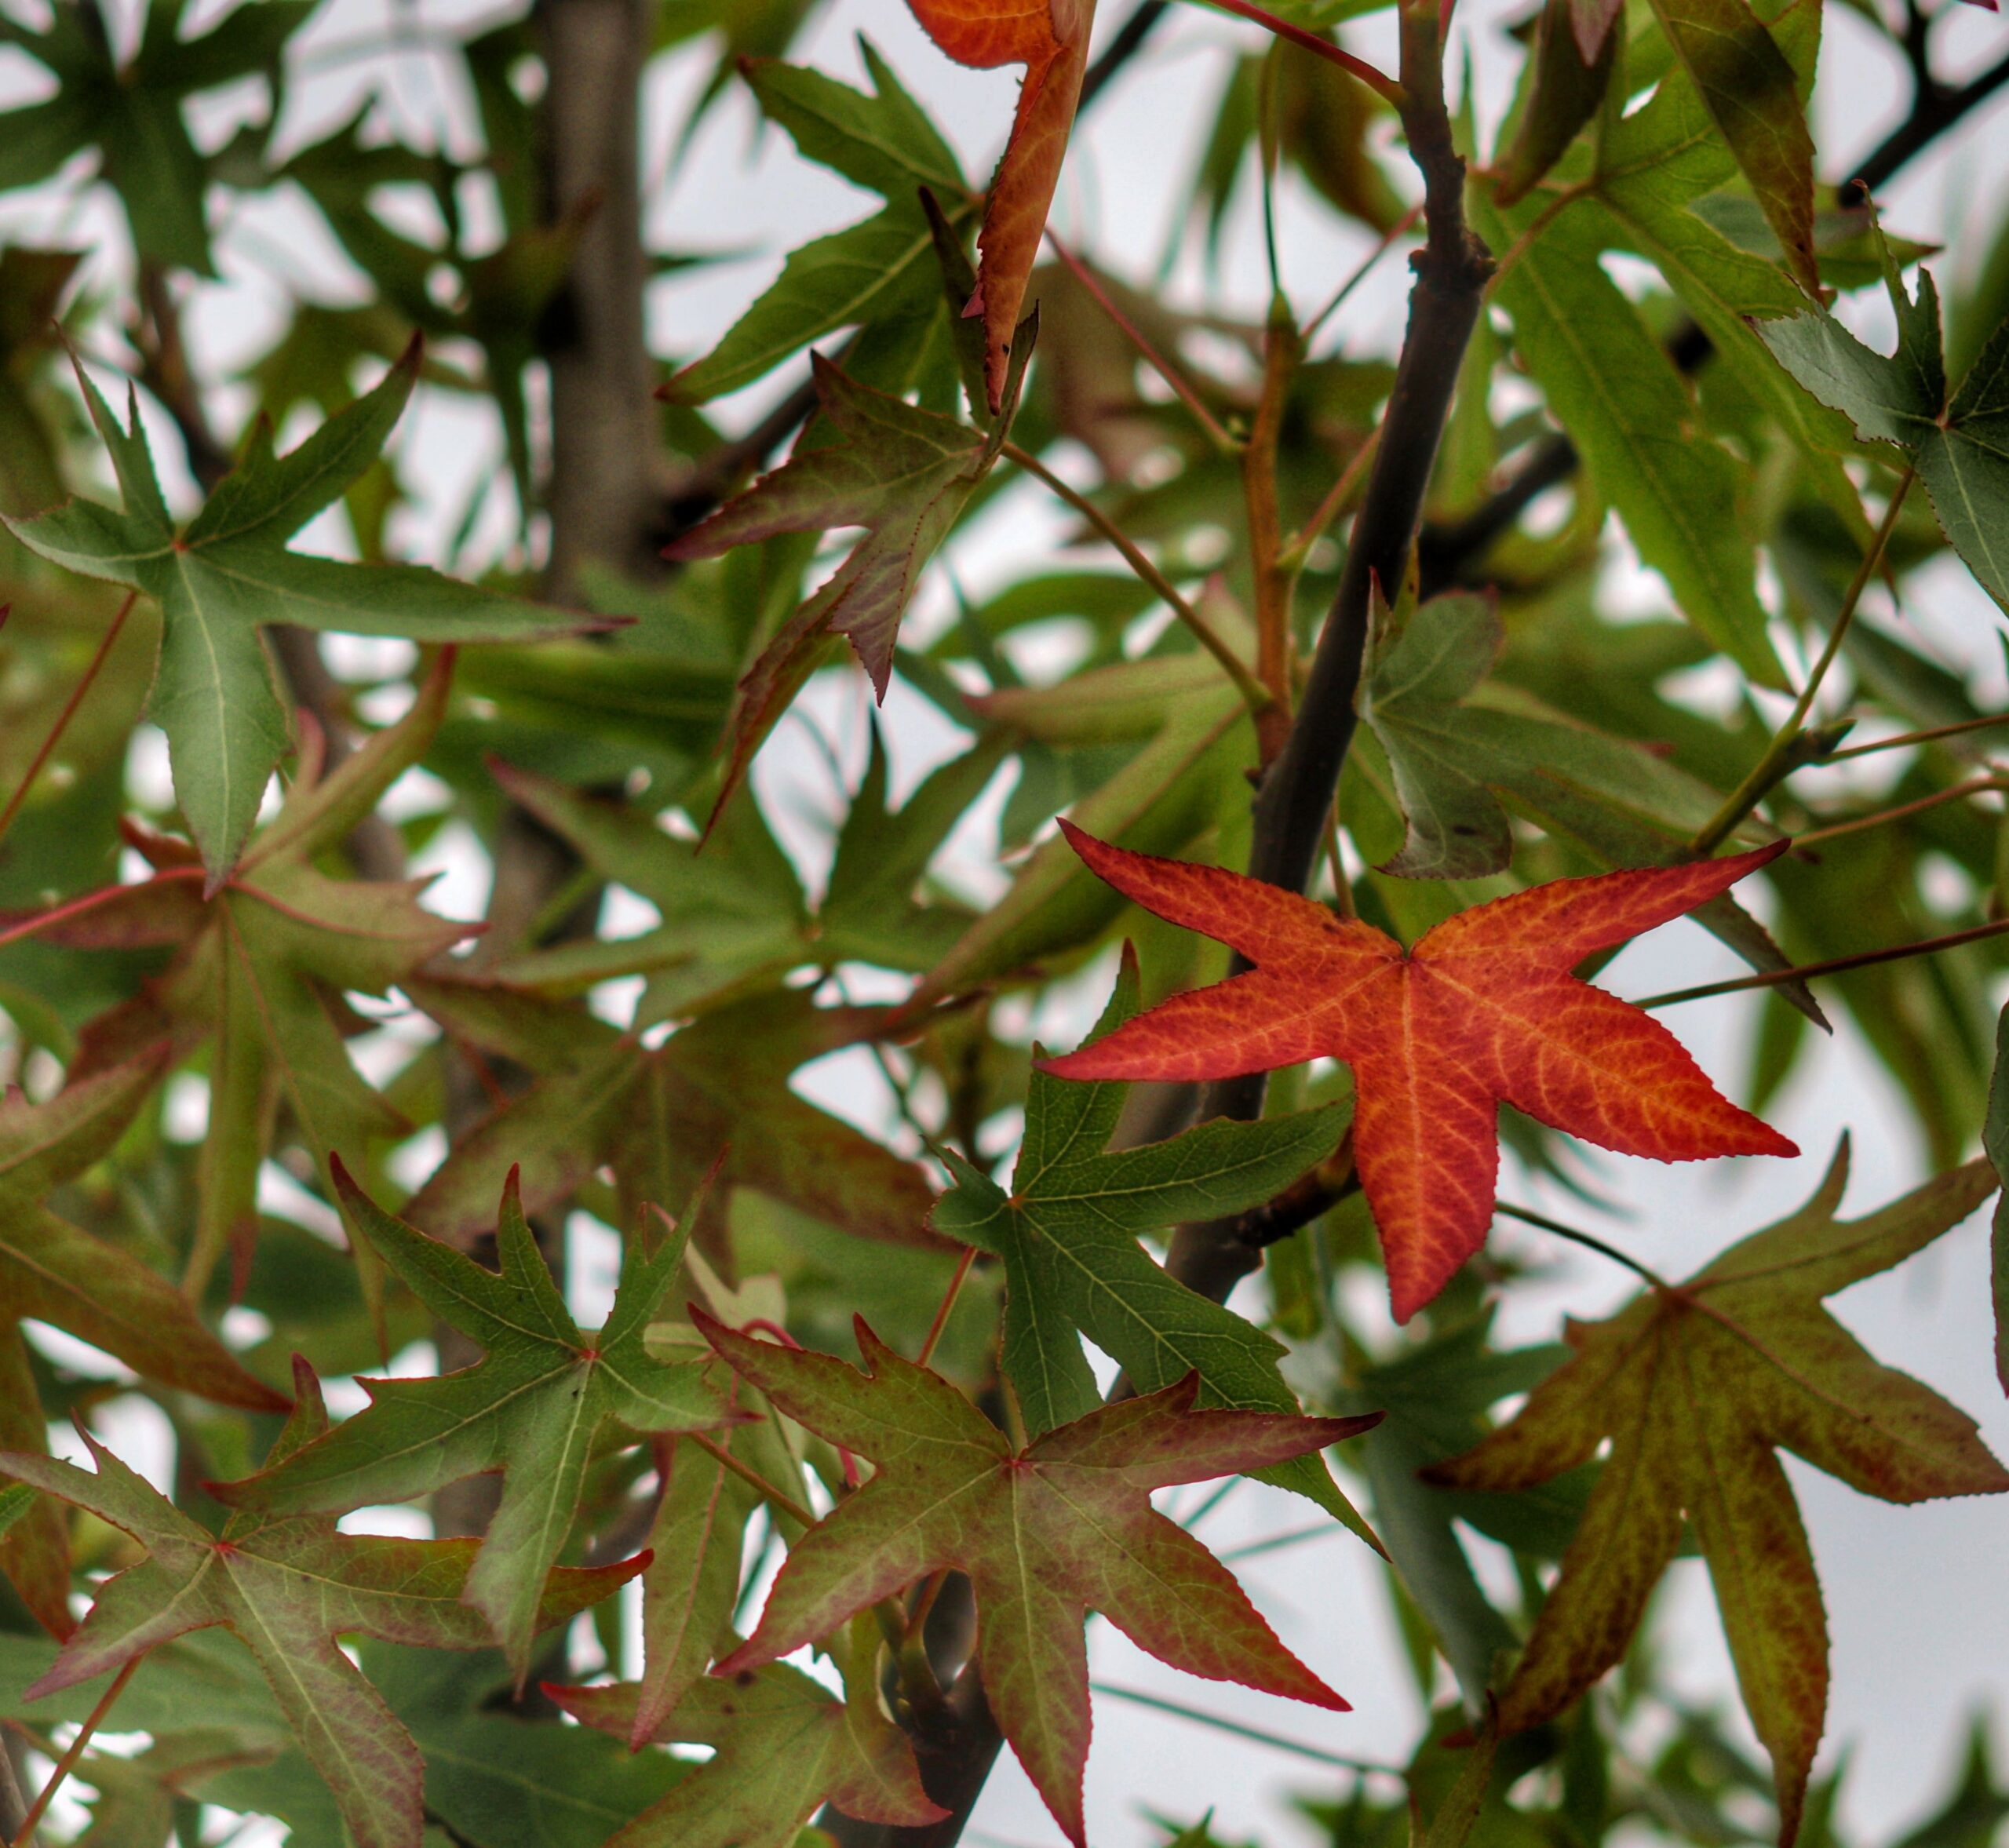 Liquidambar Worplesdon green leaves turning red in autumn